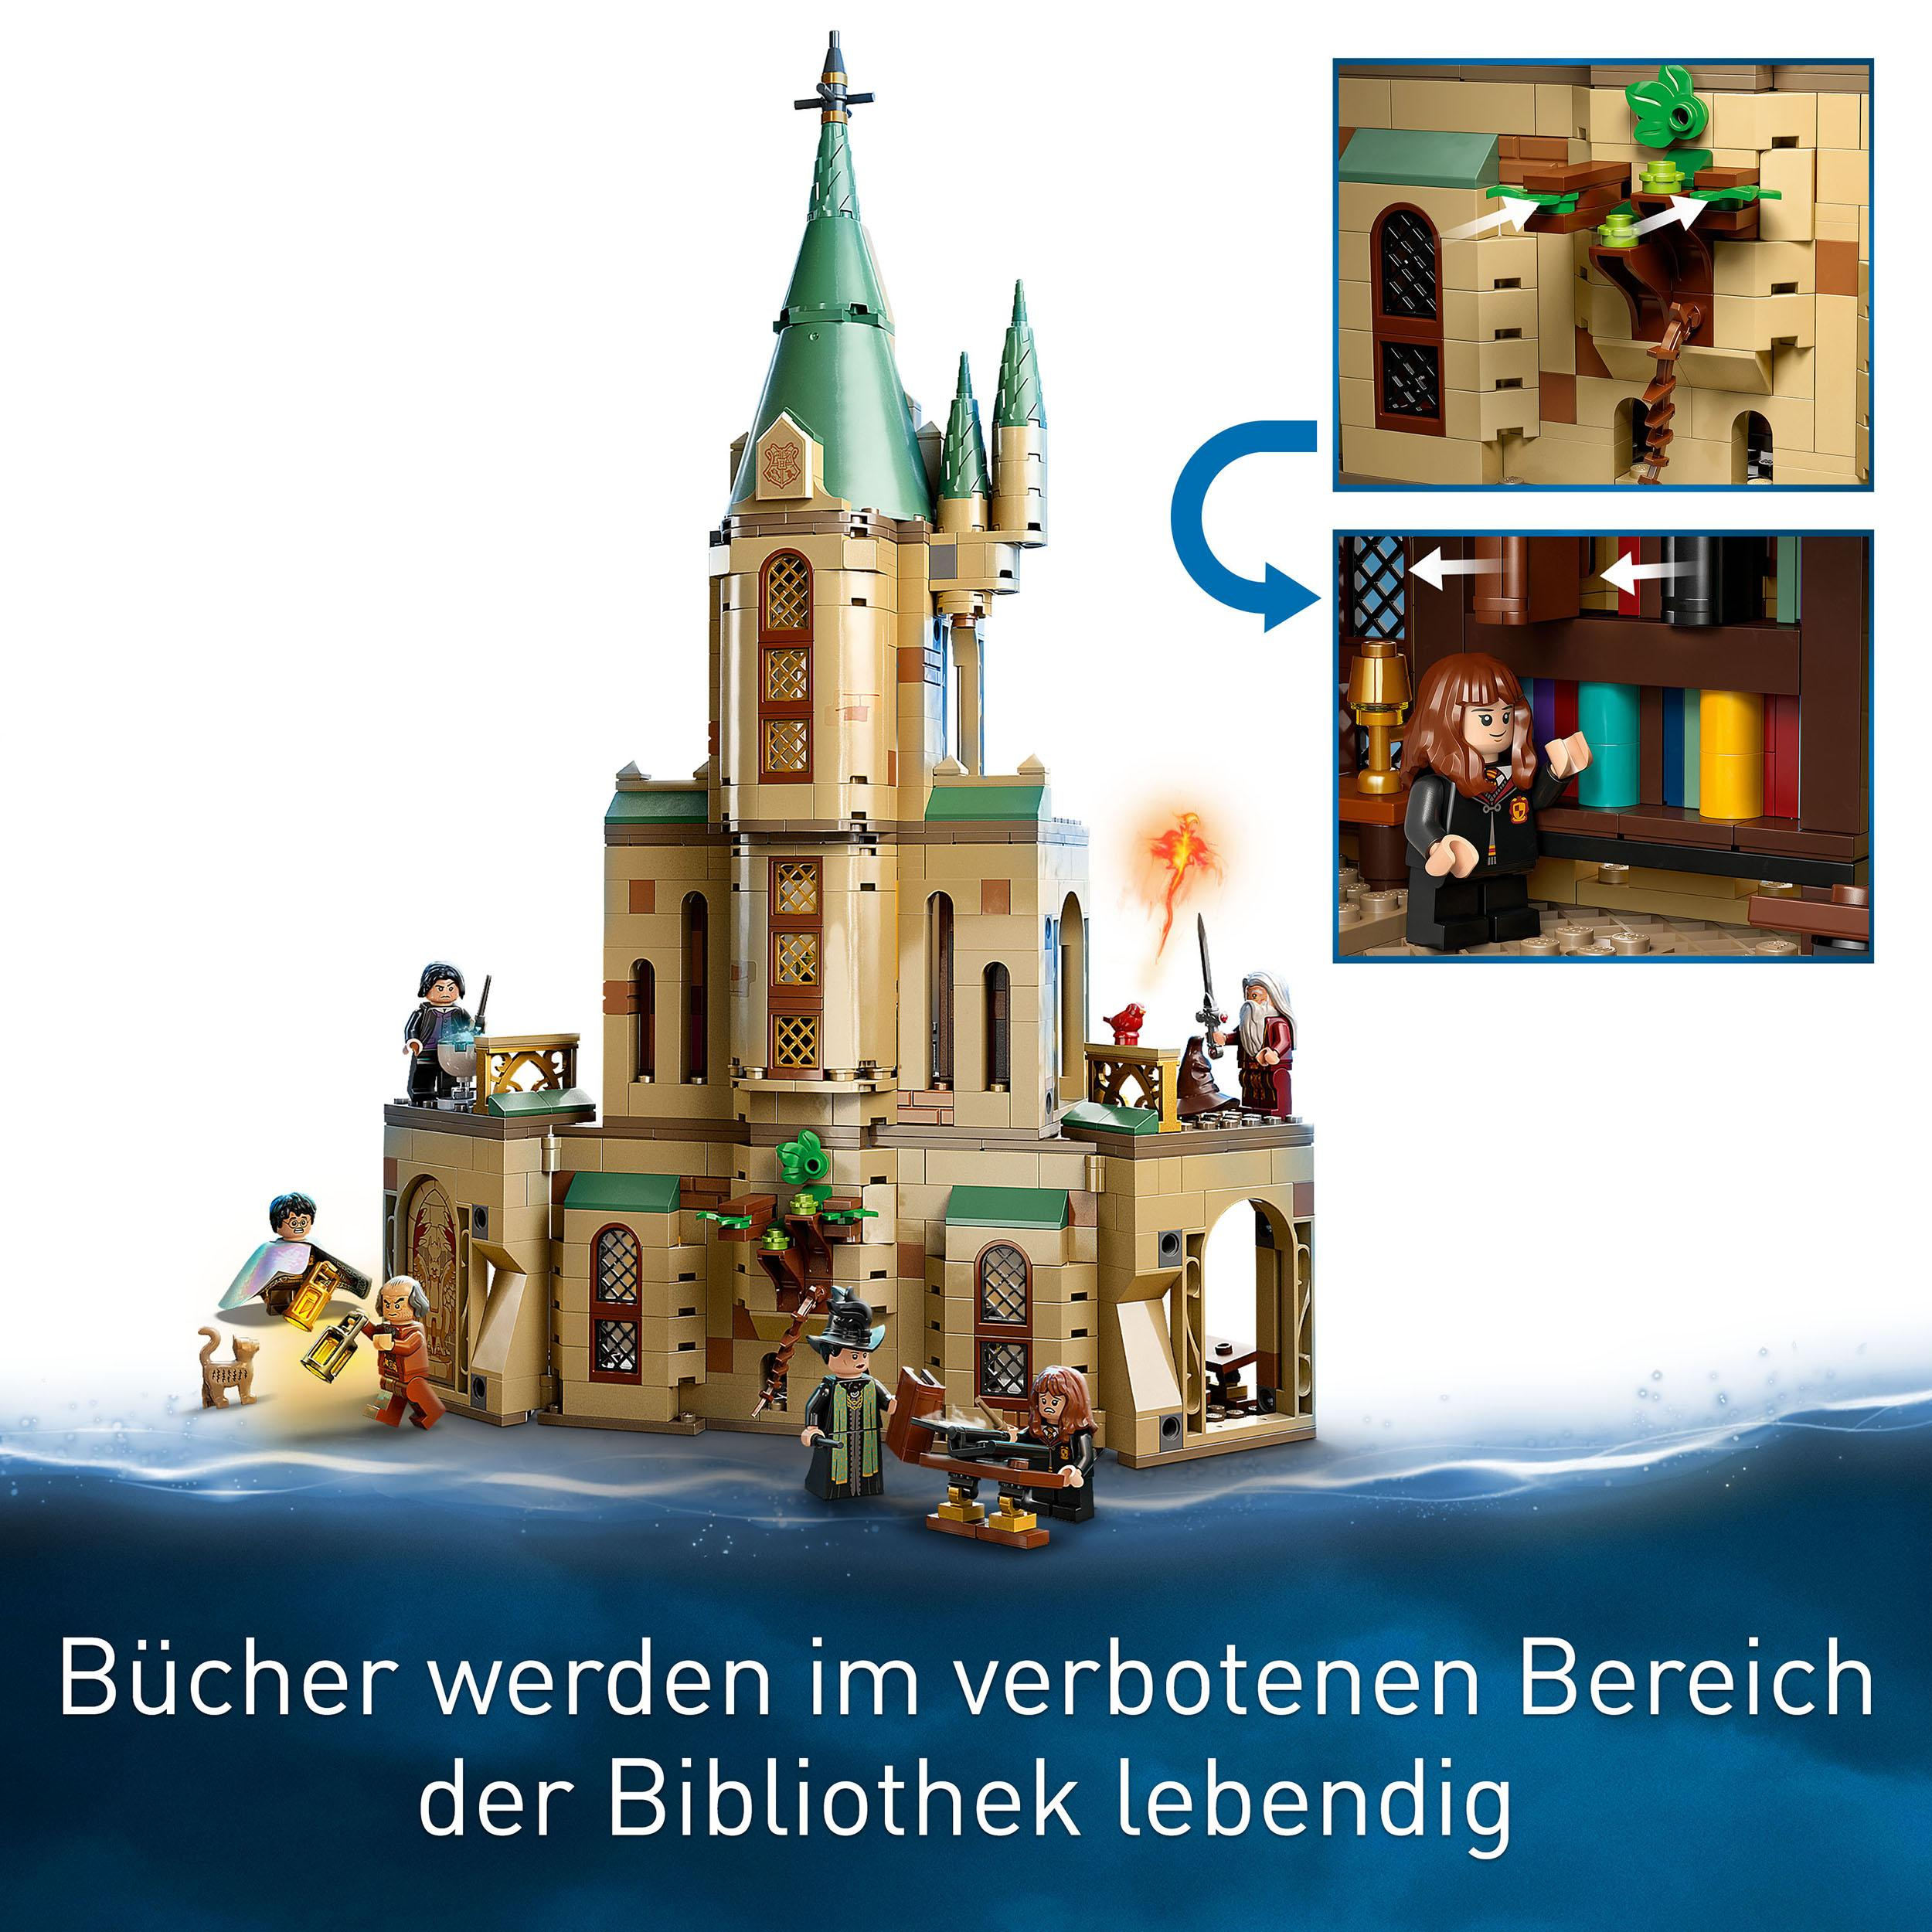 LEGO Harry Mehrfarbig Bausatz, Dumbledores Potter Hogwarts™: Büro 76402